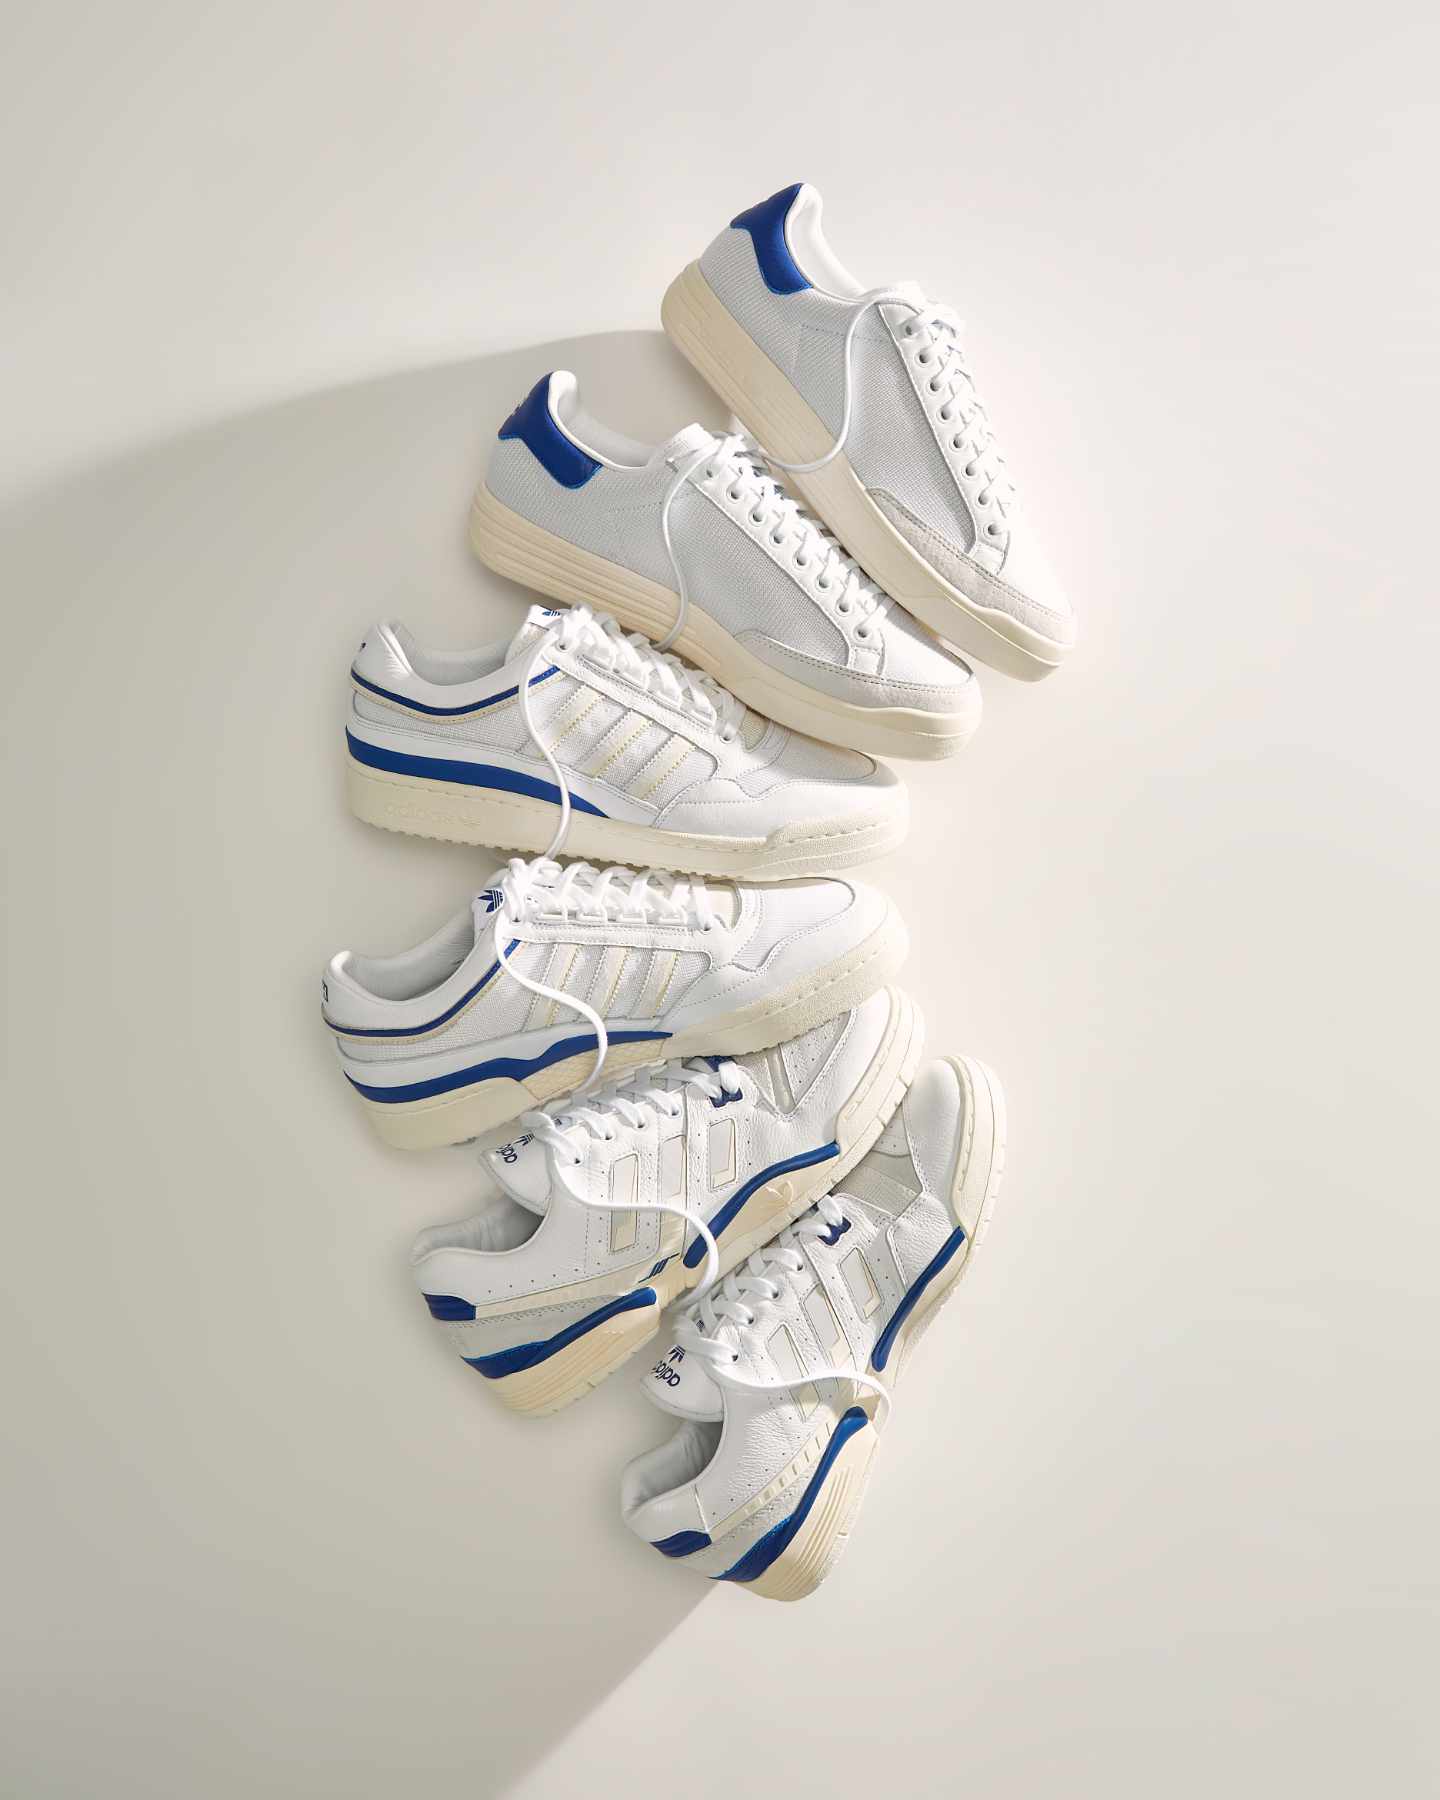 KITH & adidas' collaborative Rod Laver, IL Comp, and Torsion Edberg shoes